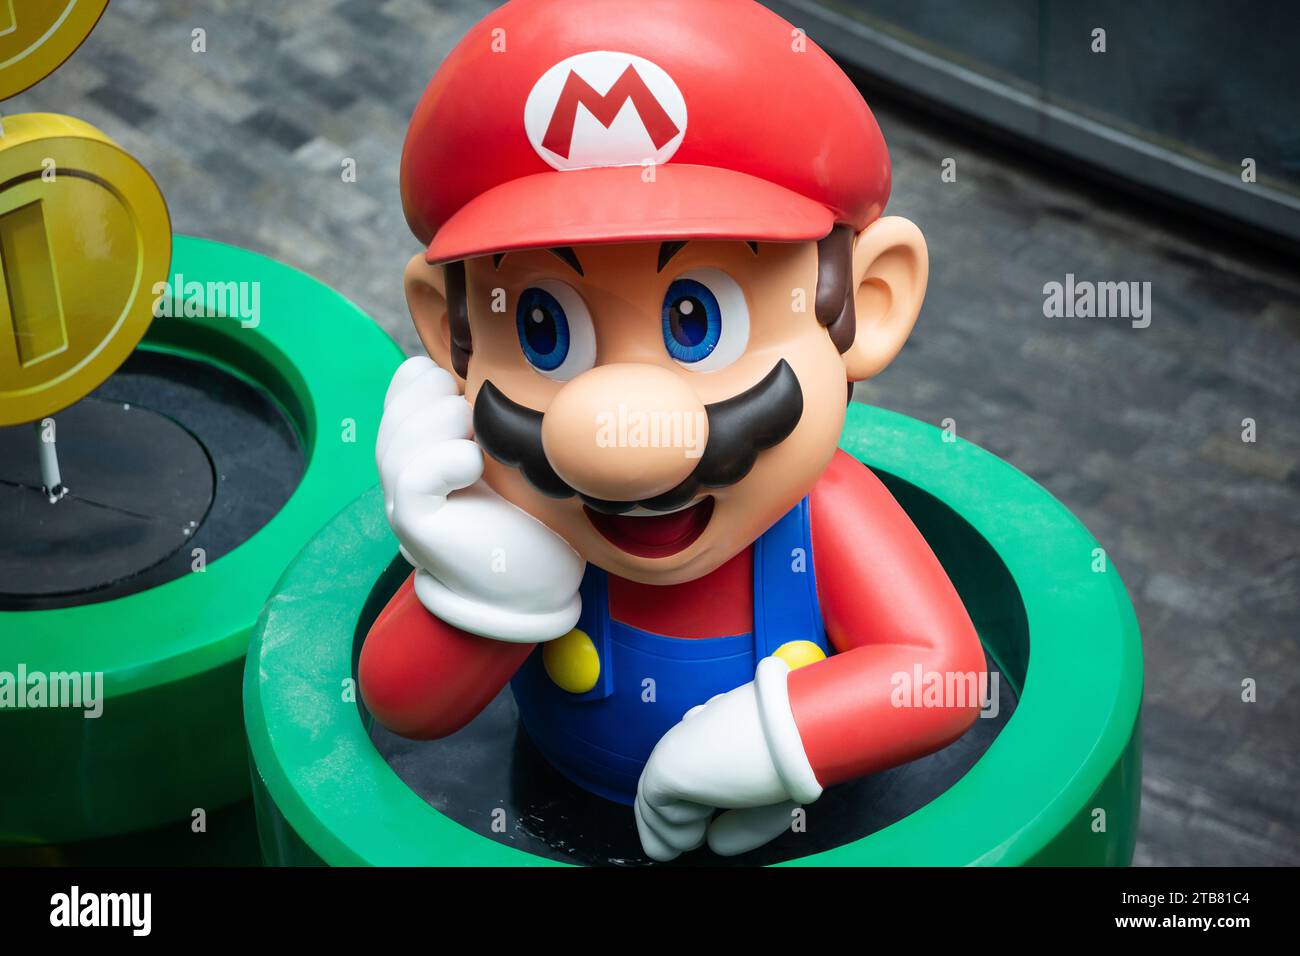 Nintendo Switch Super Mario Odyssey Edition System Console BRAND NEW RARE  Japan